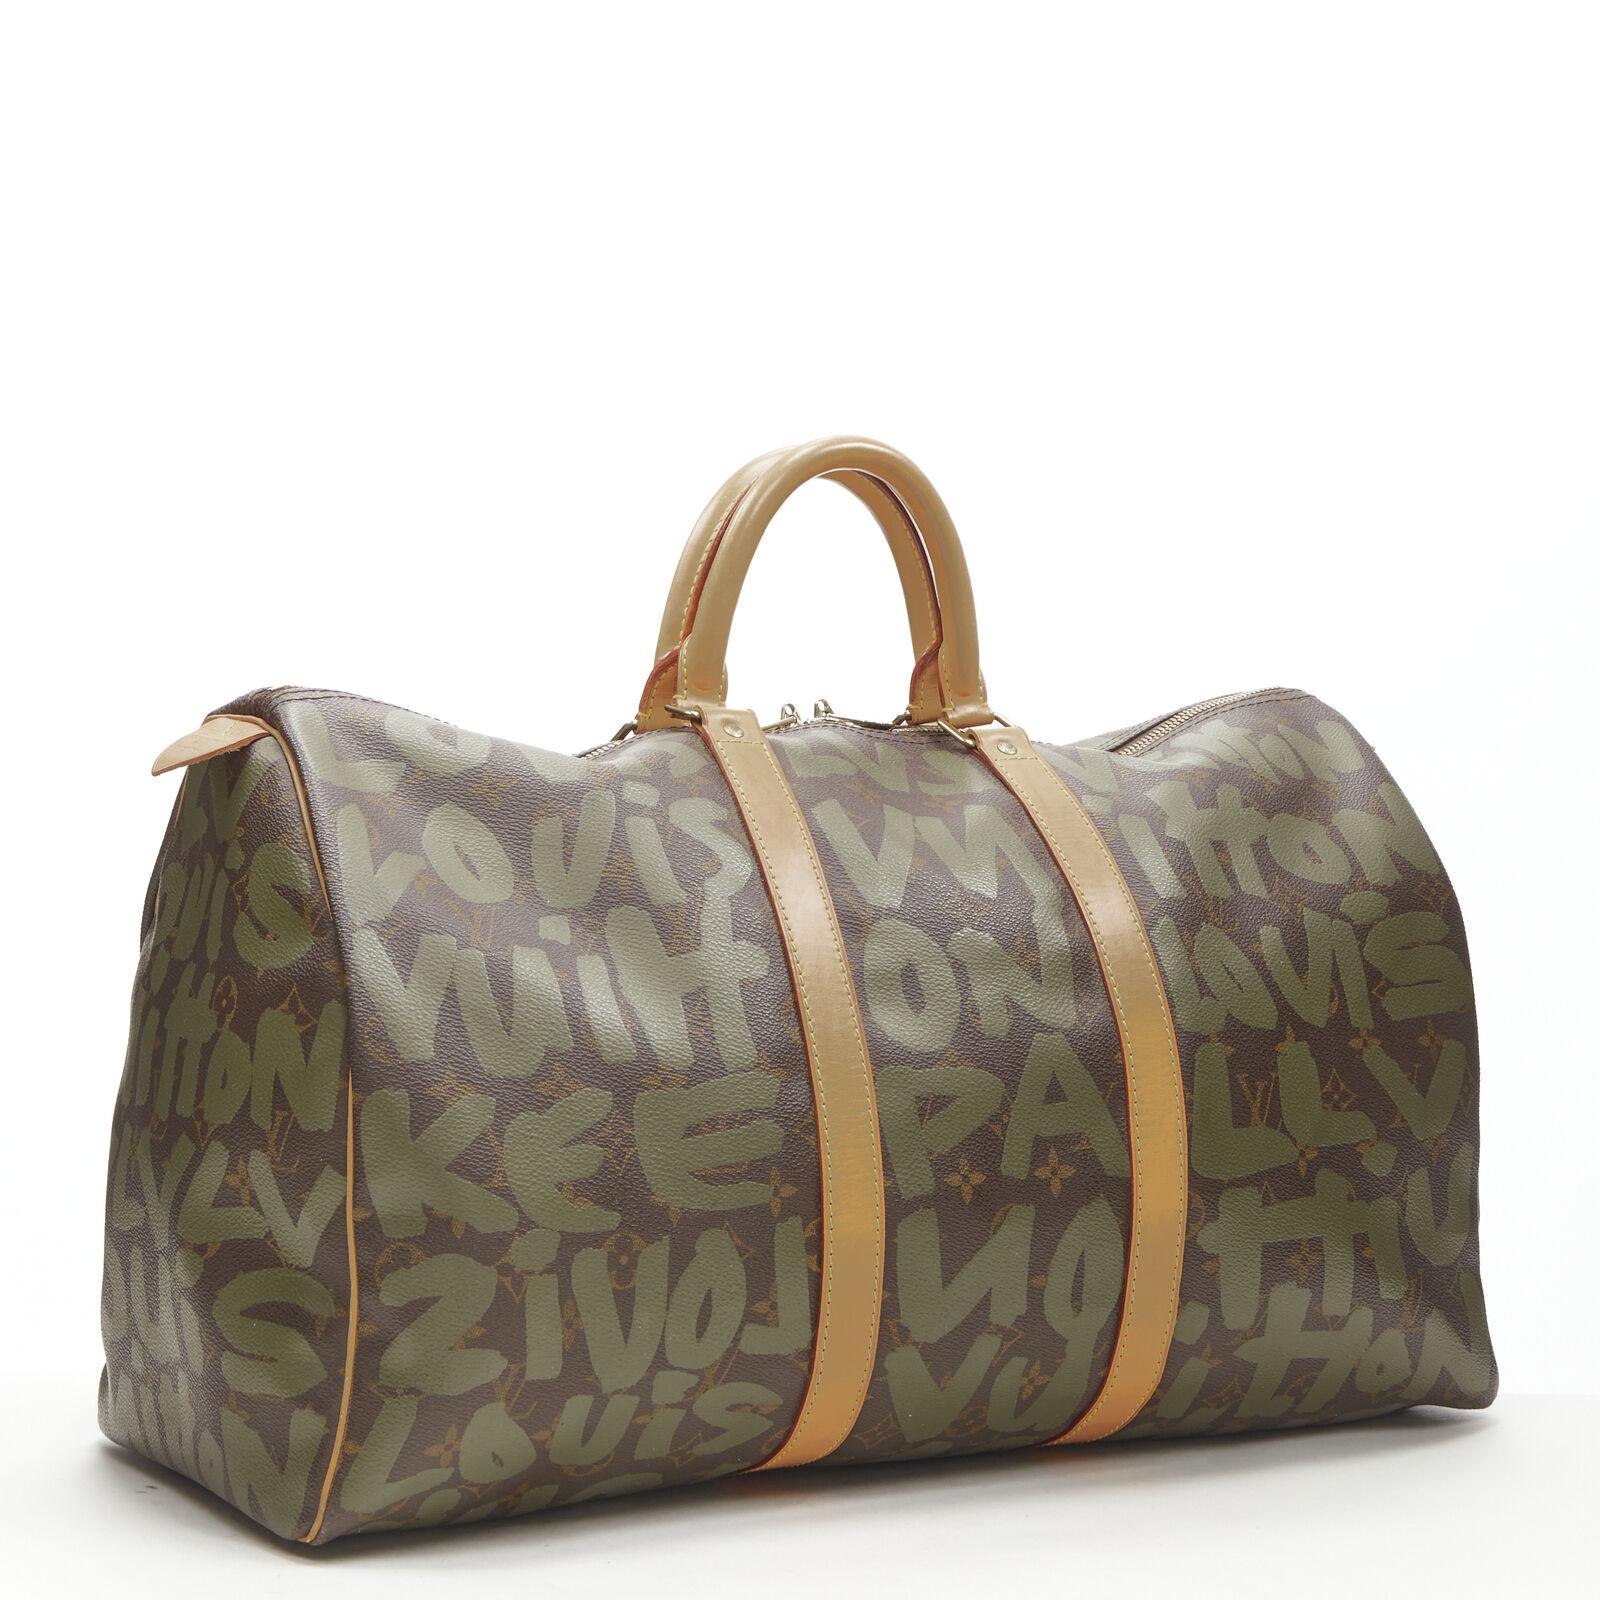 Beige Louis Vuitton - Sac Keepall 50 avec monogramme vert kaki et imprimé graffiti, rare en vente